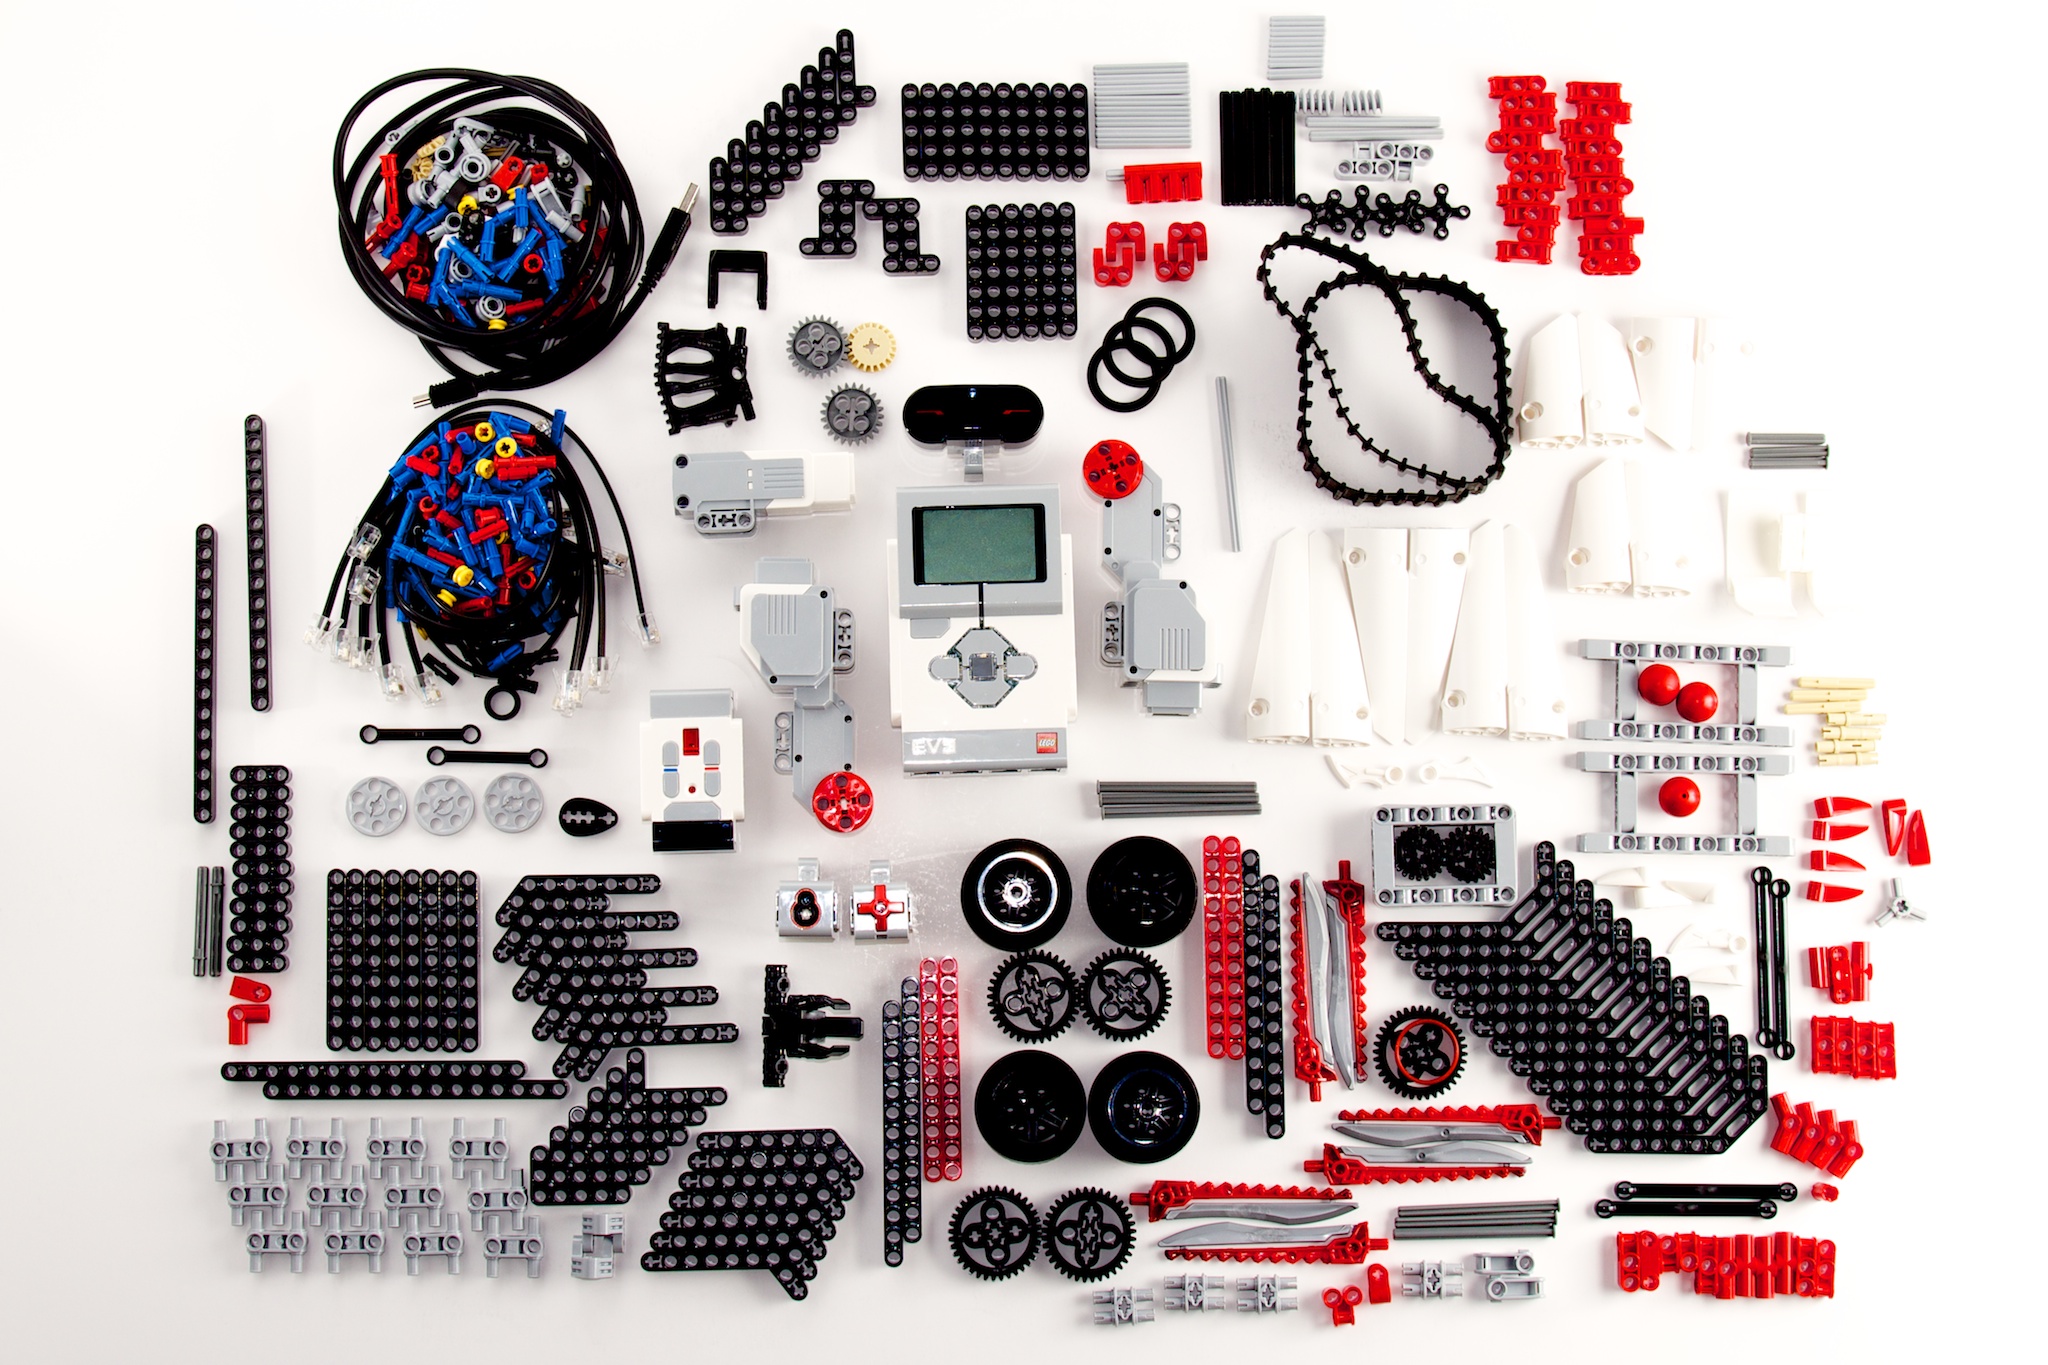 inkt Hoogland Verwoesten Review: Lego Mindstorms EV3 means giant robots, powerful computers | Ars  Technica